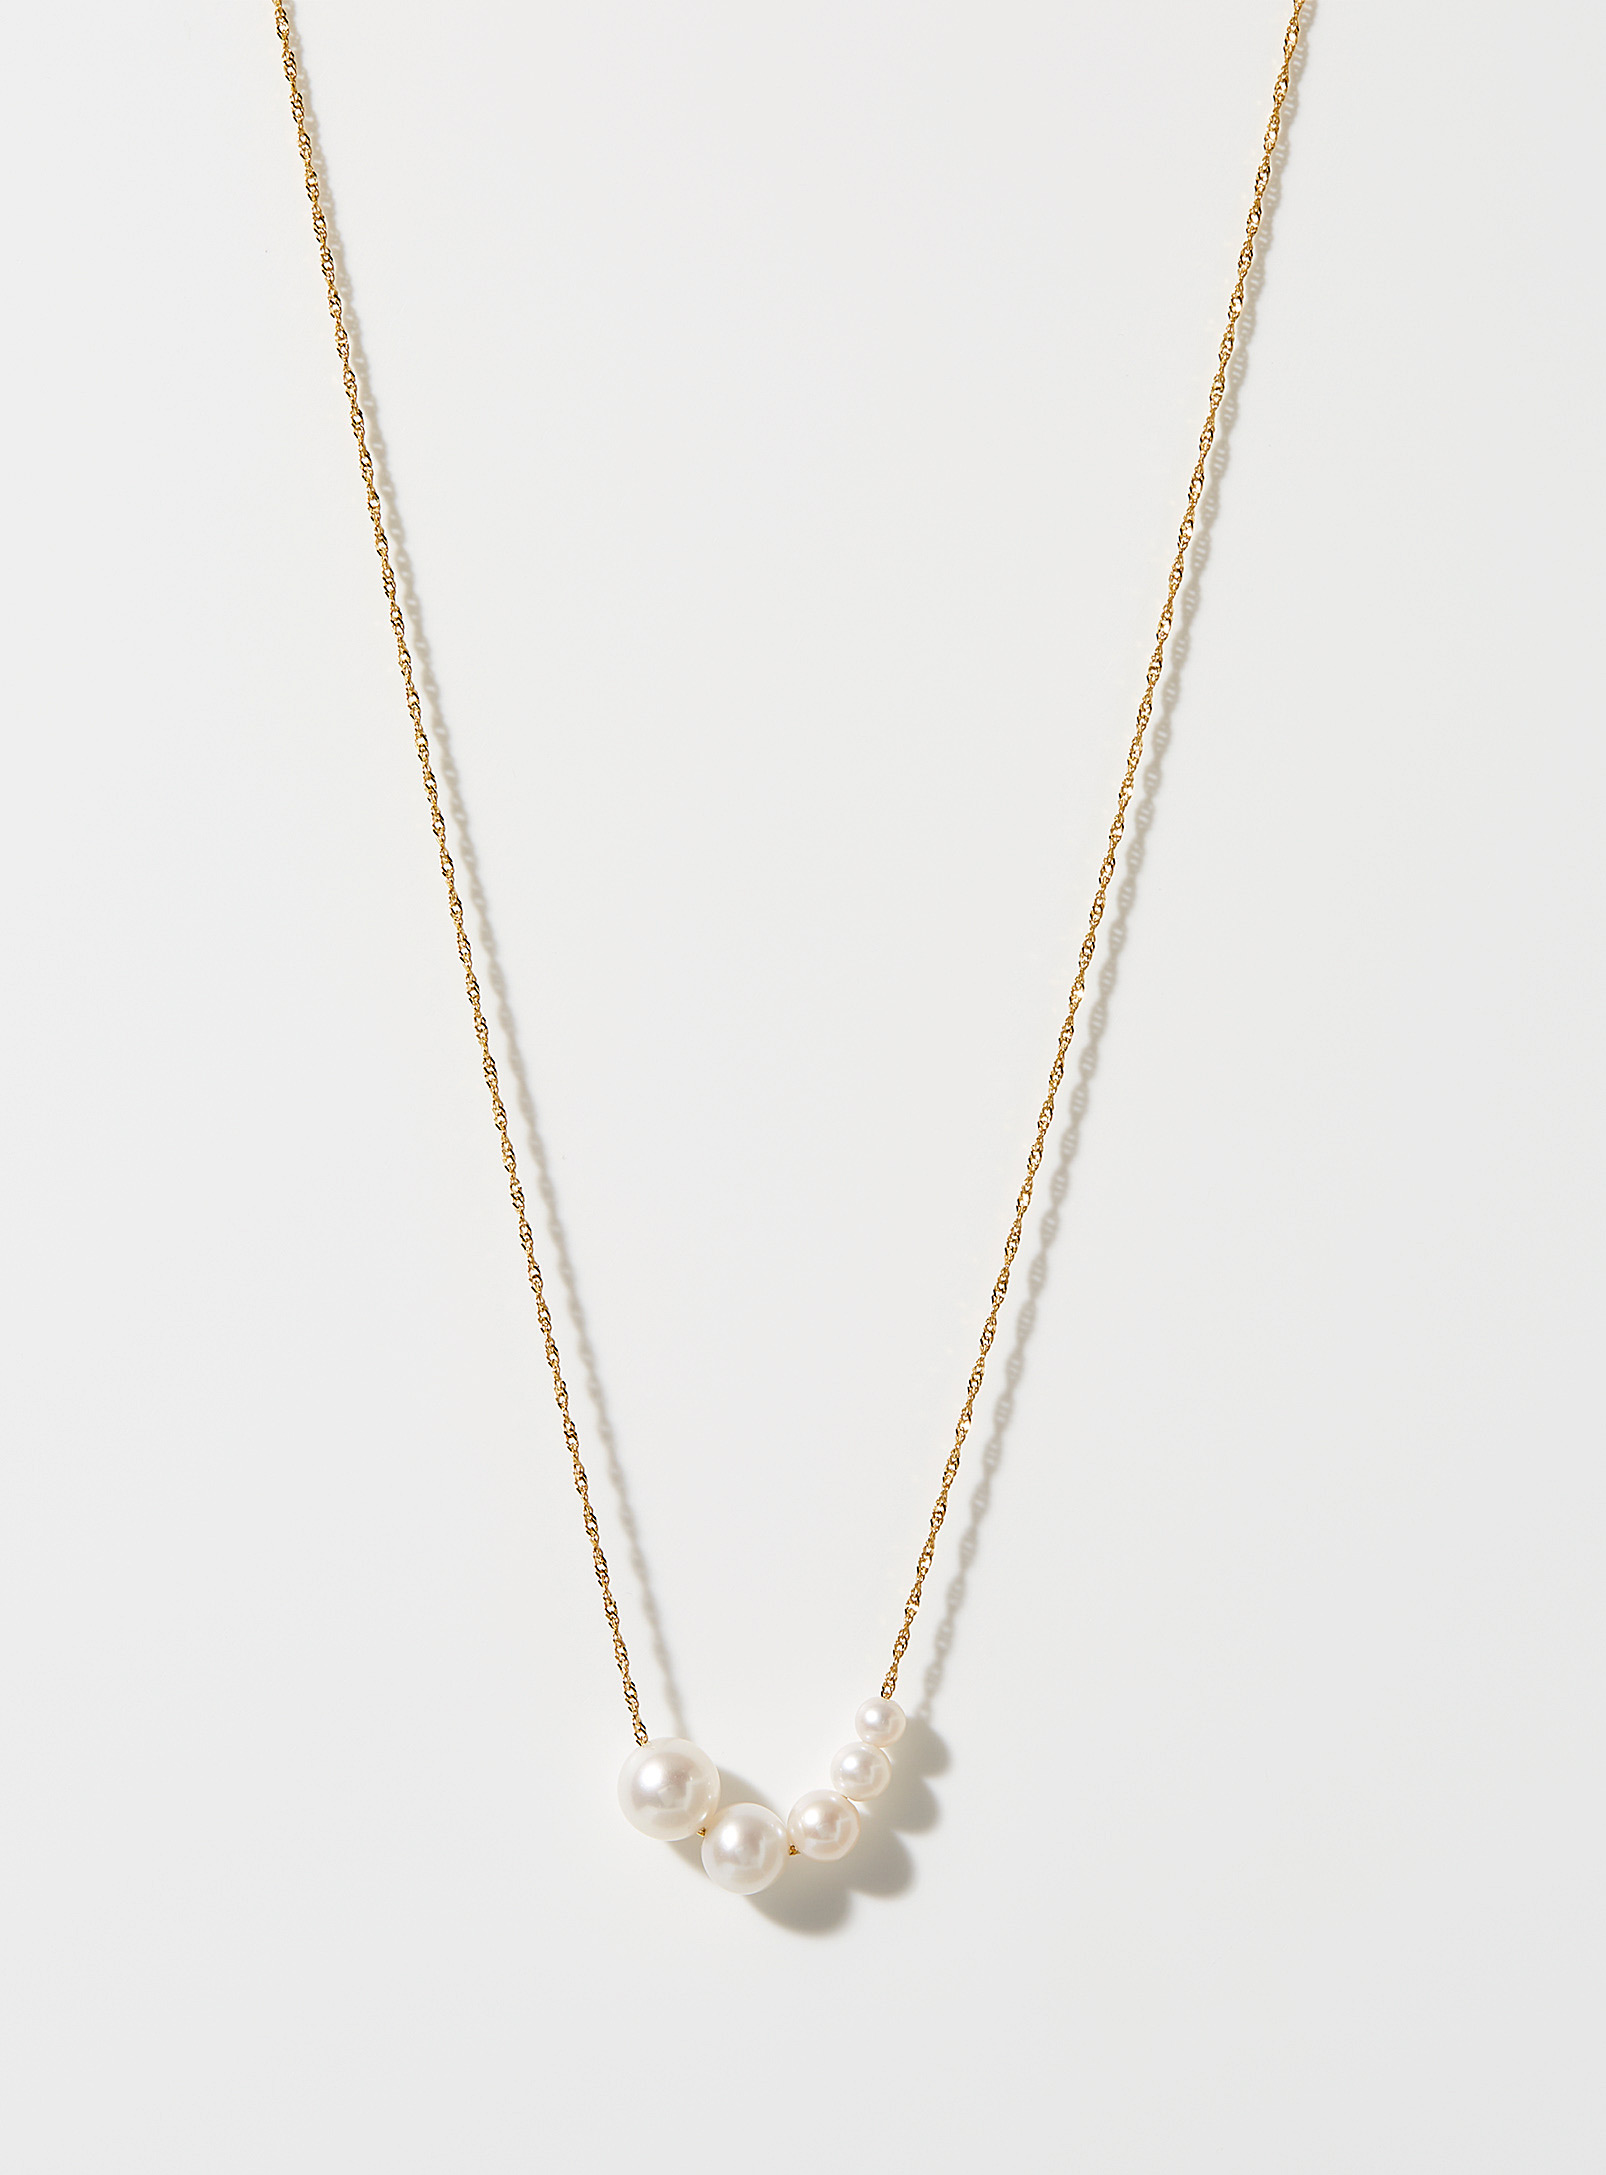 Poppy Finch - Women's Freshwater pearls twisted chain